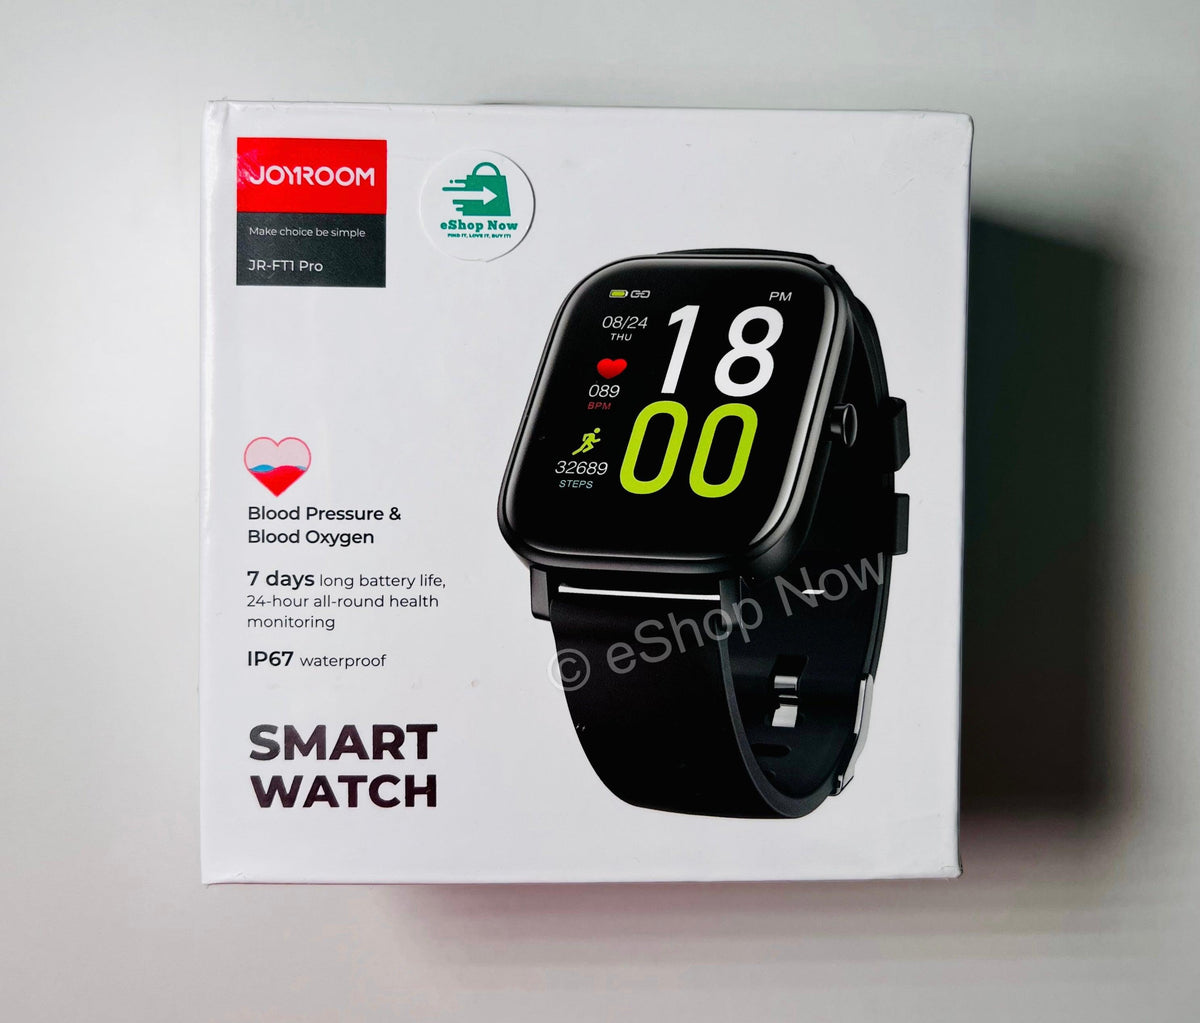 Joyroom FT1 Pro Smart Watch - eShop Now